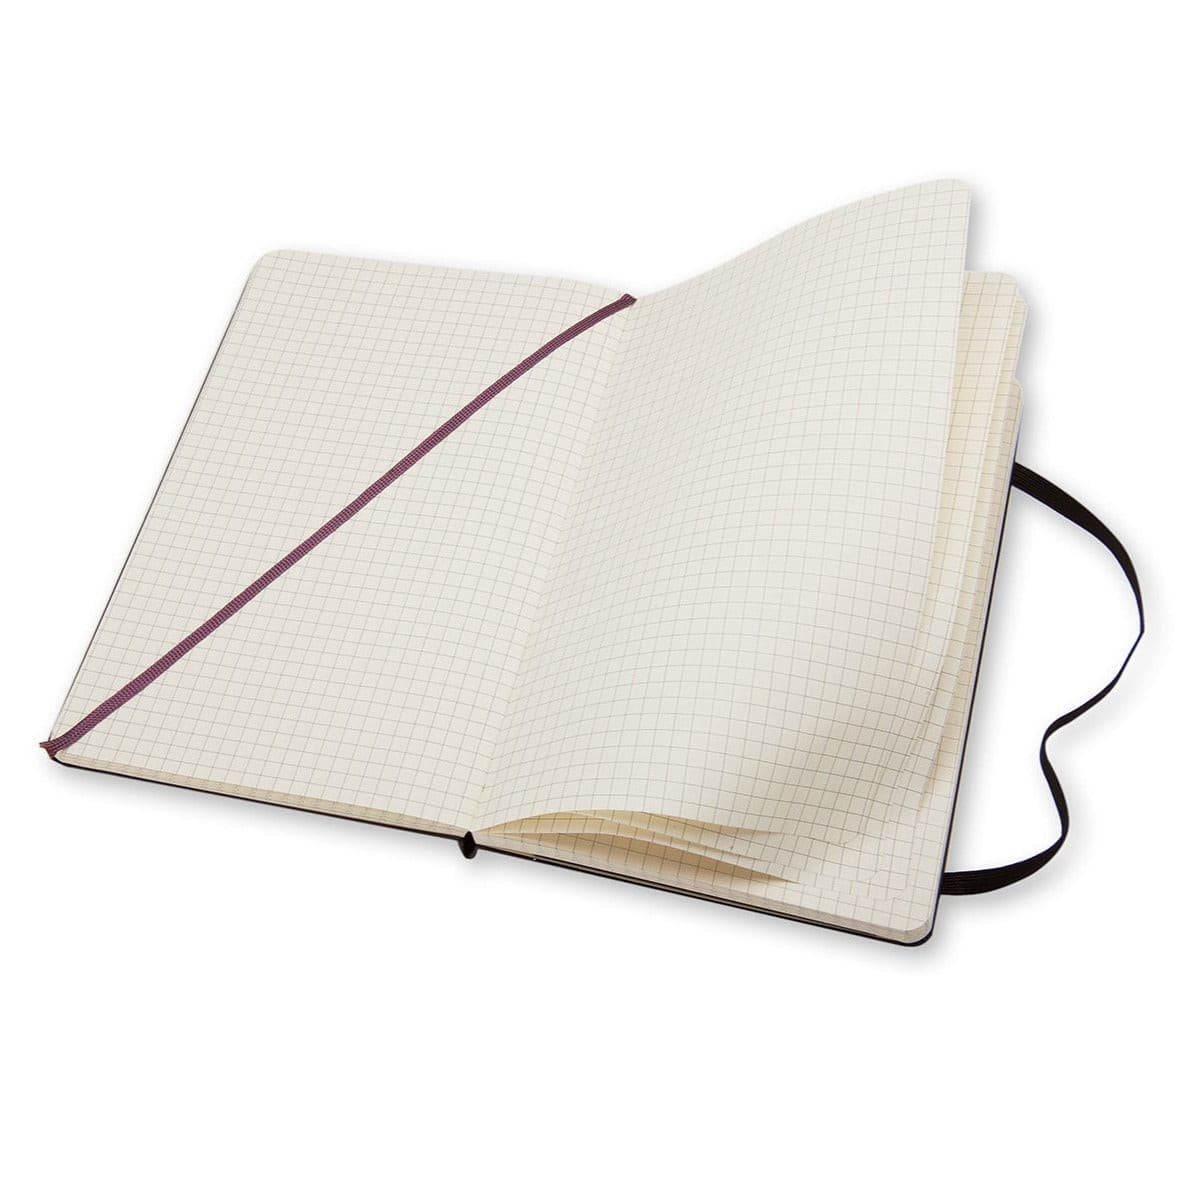 Moleskine Classic Squared Hardcover Notebook Large White